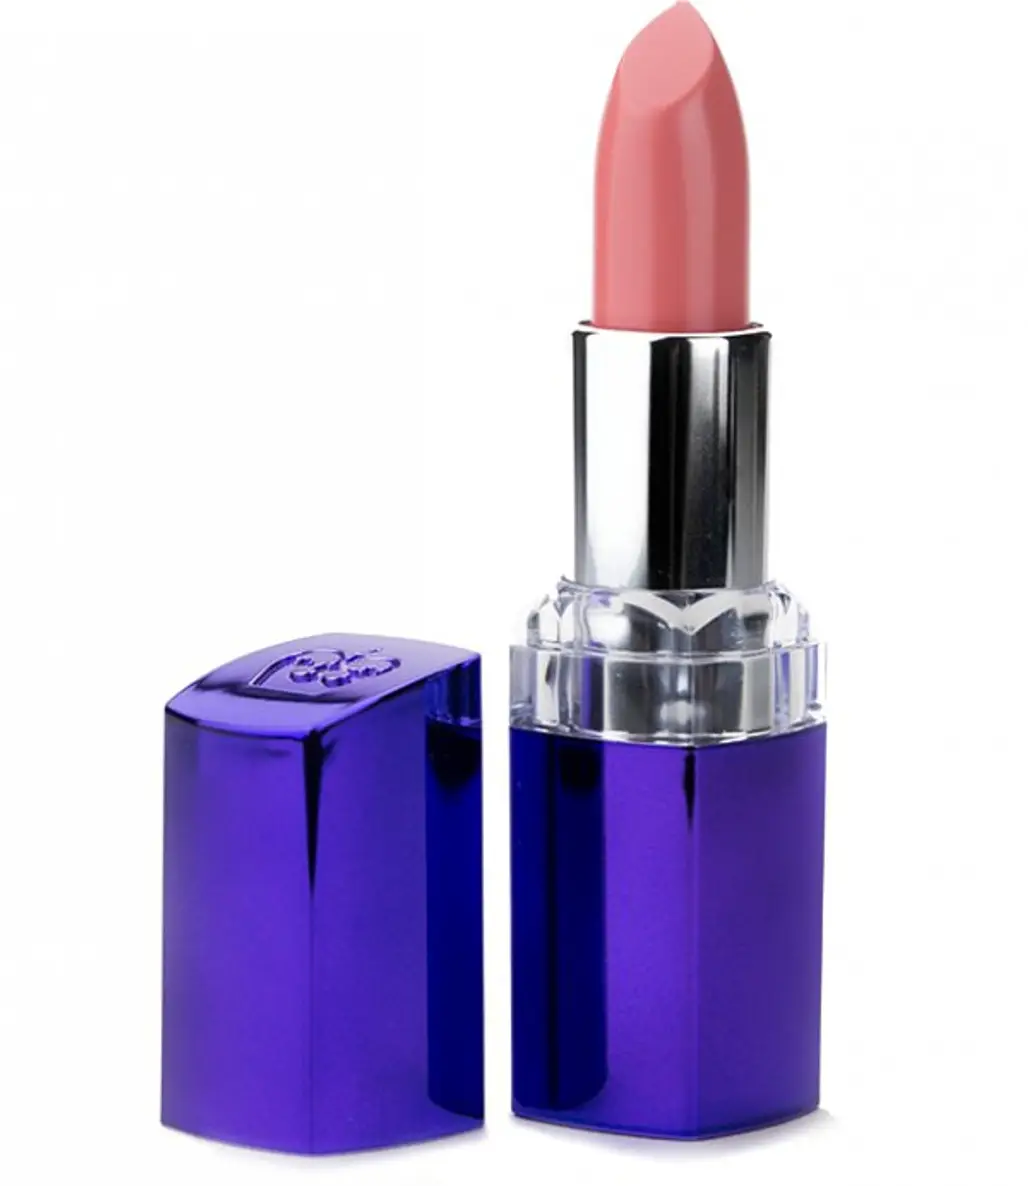 Rimmel Moisture Renew Lipstick in Let’s Get Naked